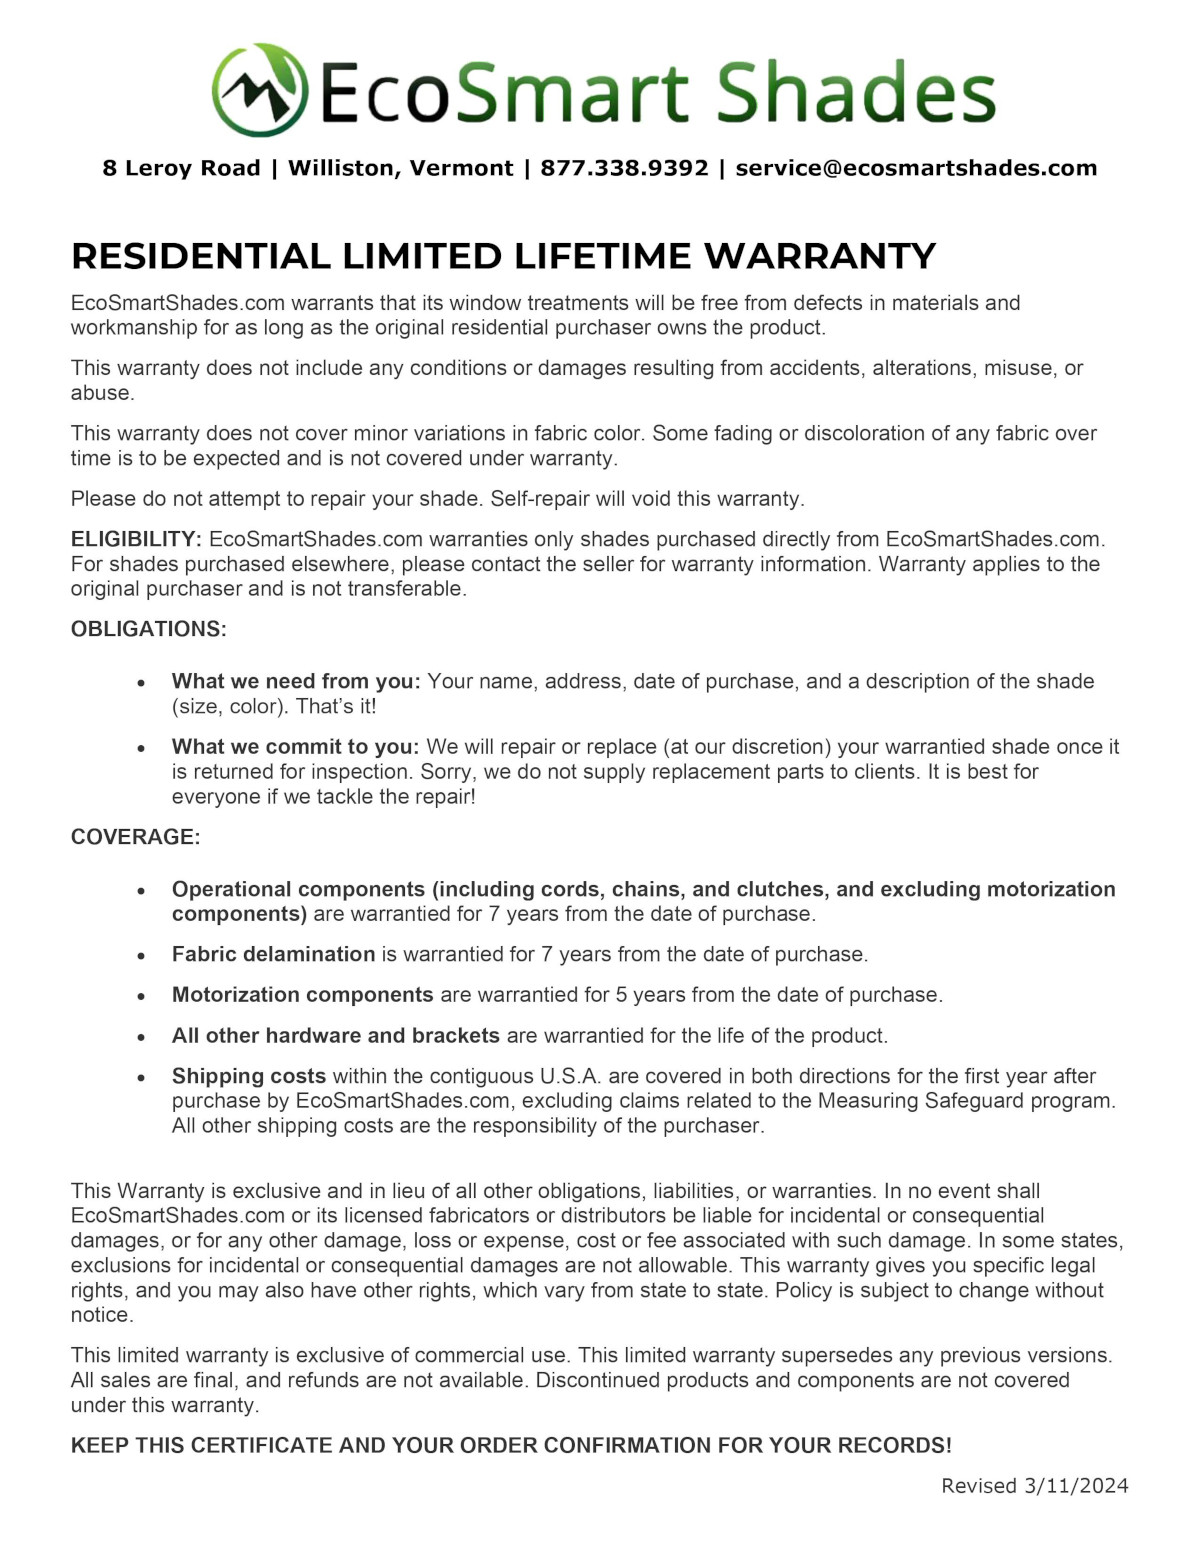 EsoSmart 2.0 Residential Shade Warranty rev. 20240311 Image